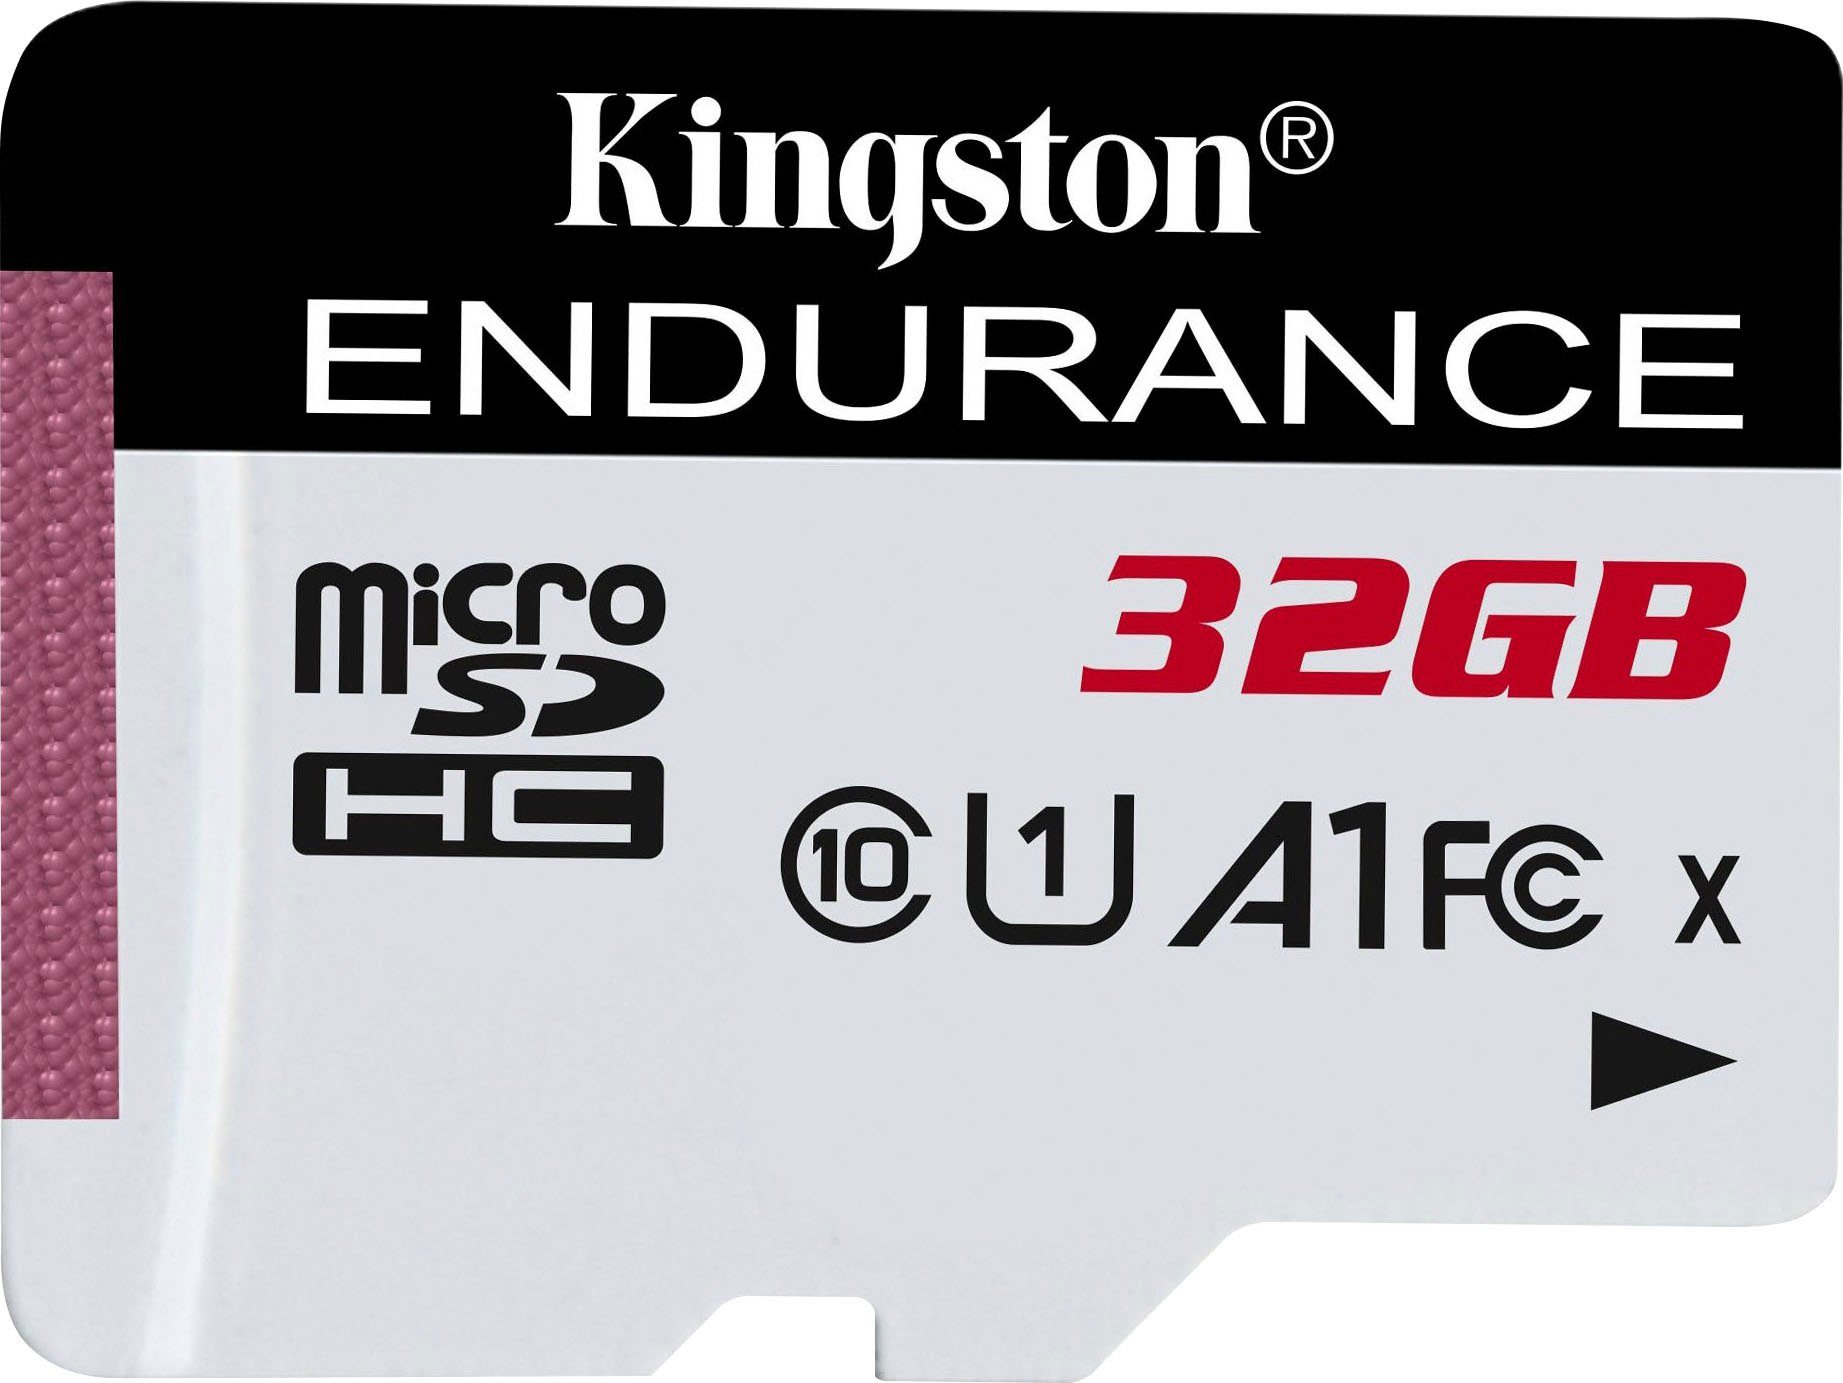 Kingston HIGH-ENDURANCE microSD 32GB Speicherkarte (32 GB, UHS-I Class 10, 95 MB/s Lesegeschwindigkeit)